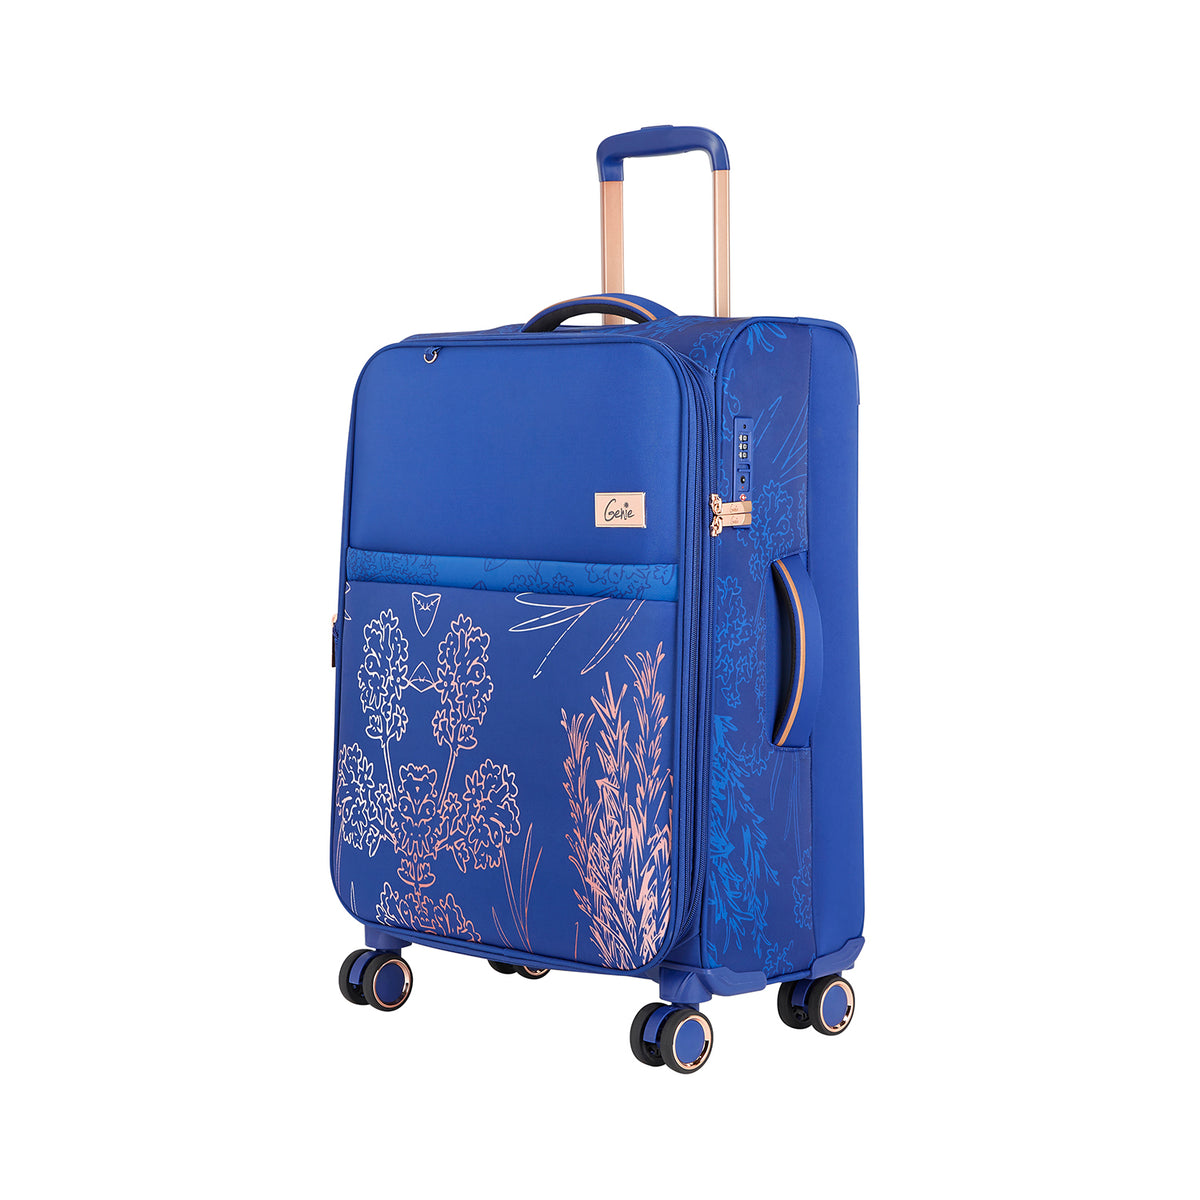 Bliss Small, Medium and Large Soft luggage Combo Set - Royal Blue